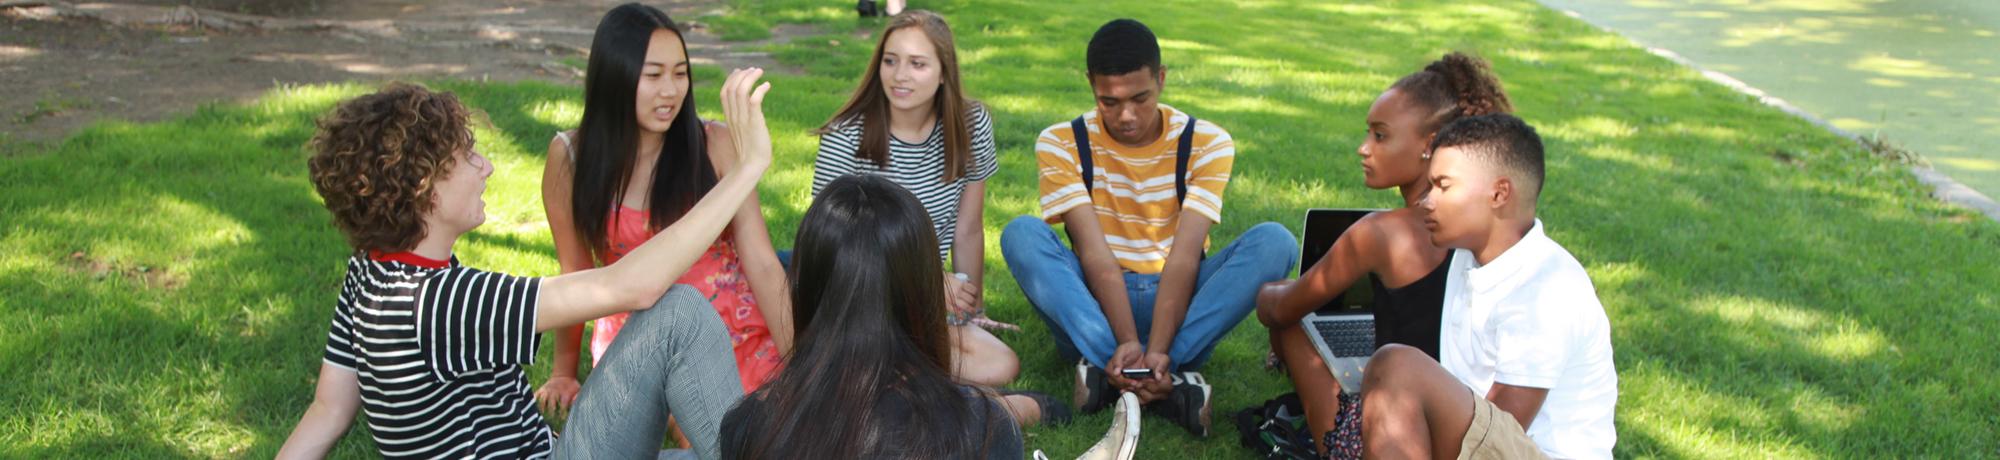 high school students sitting on grass